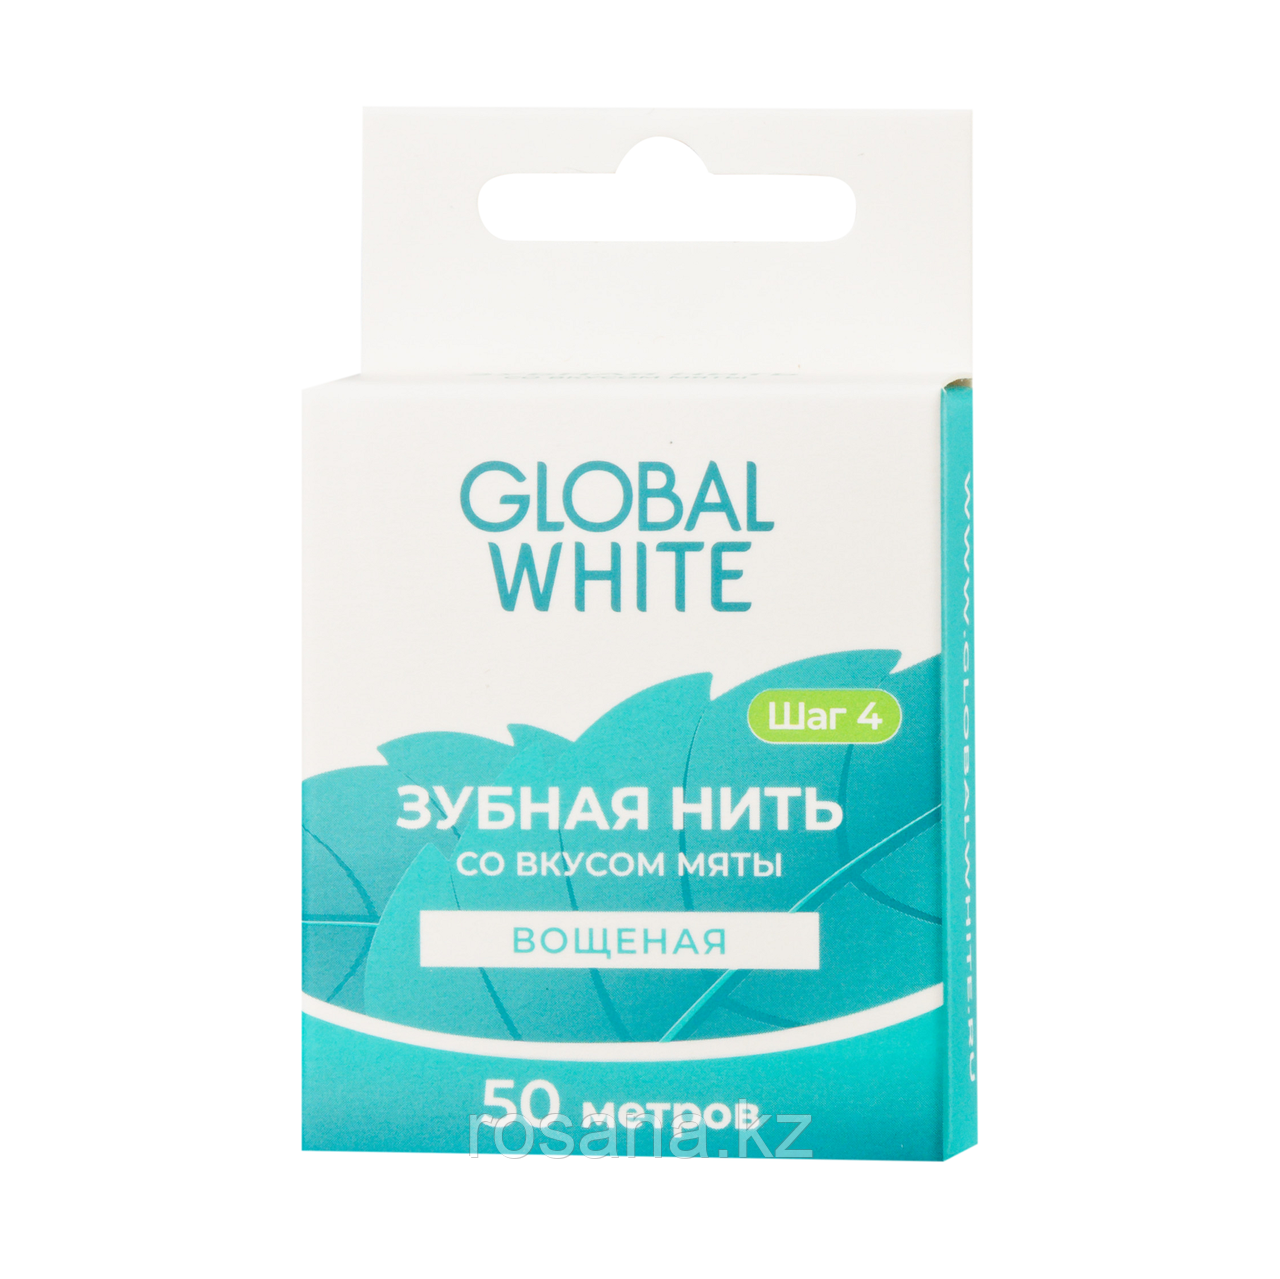 Global White Зубная нить со вкусом мяты 50м